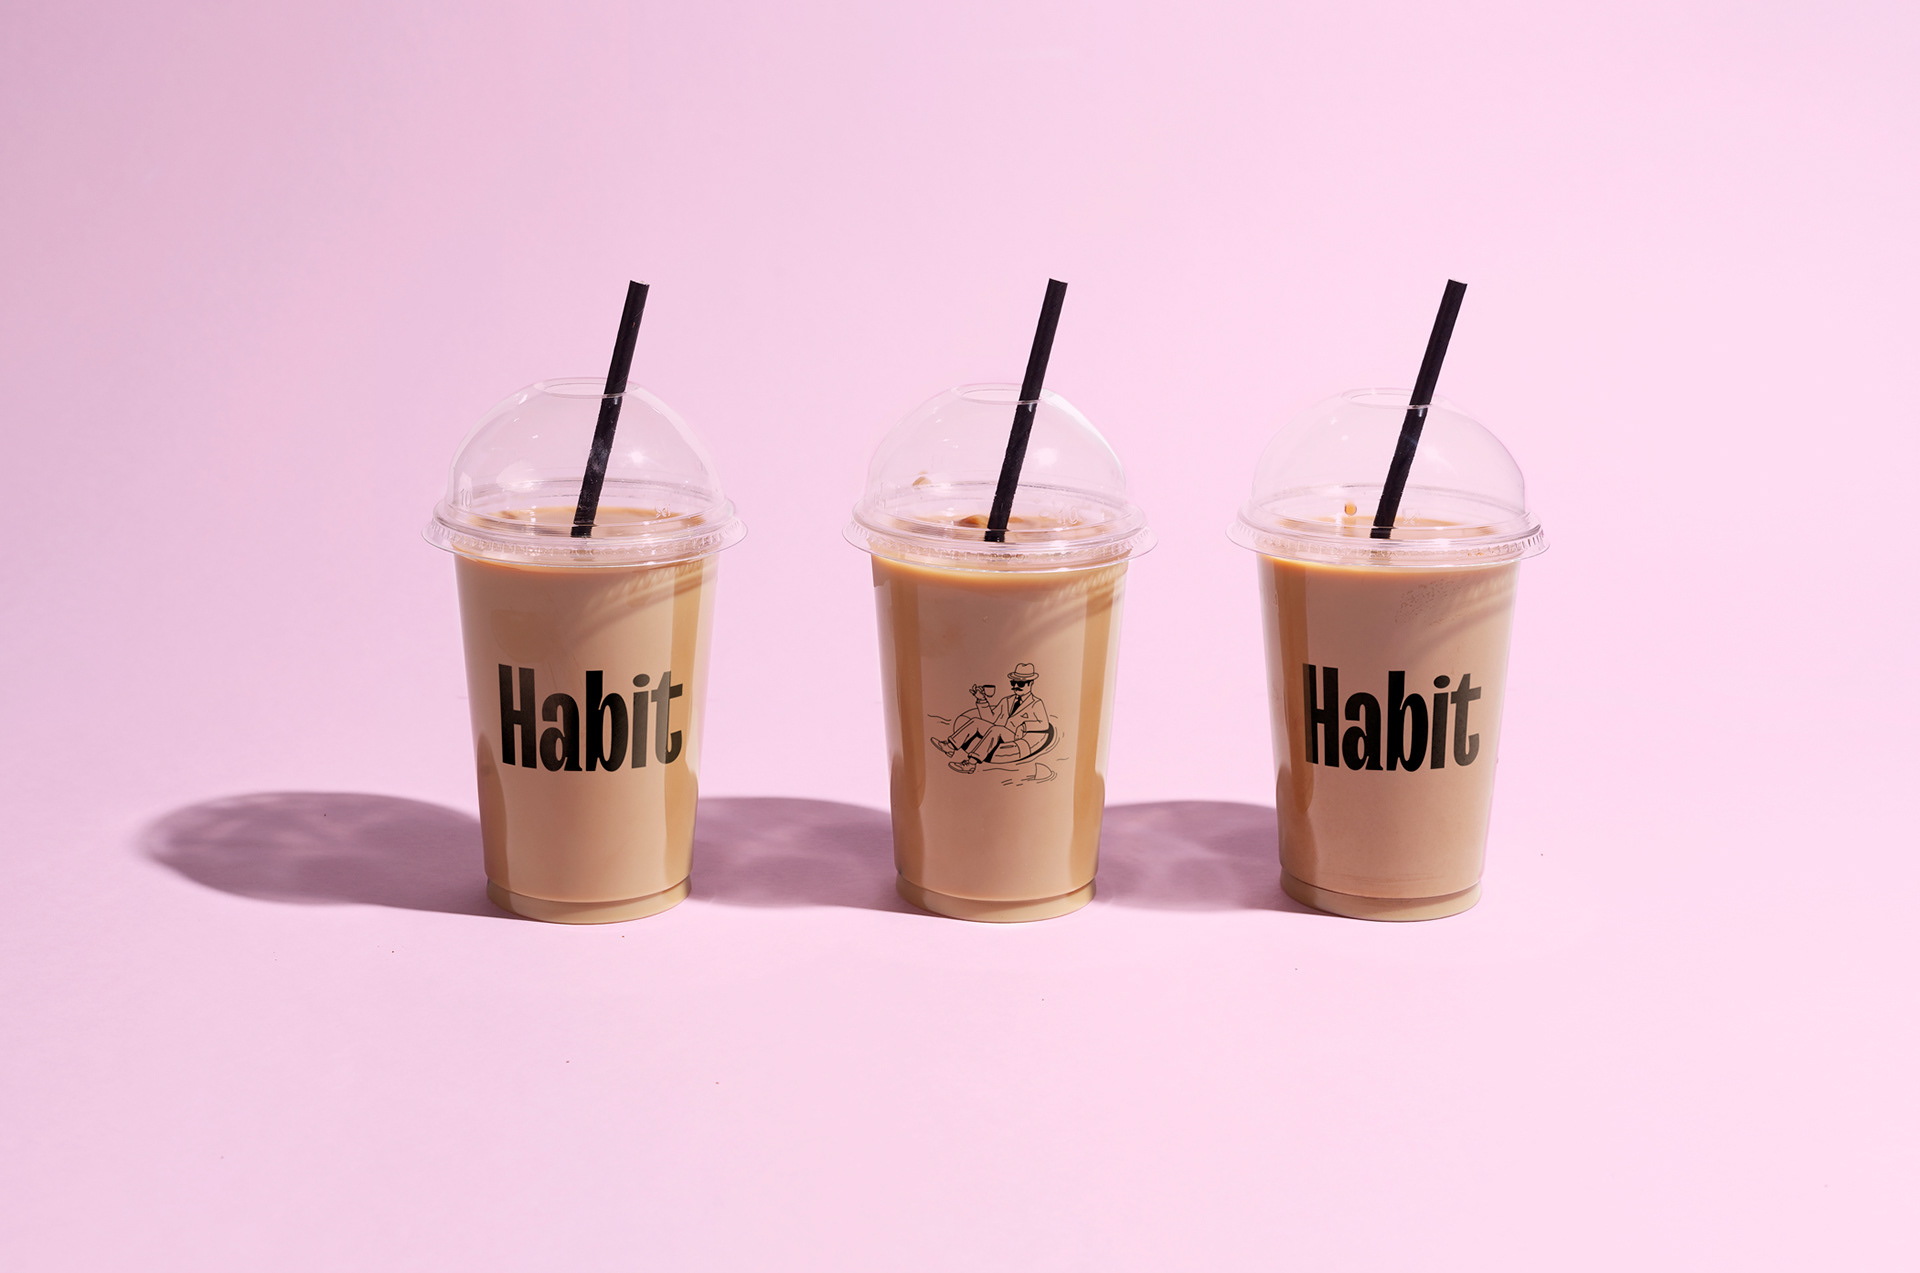 Habit coffee